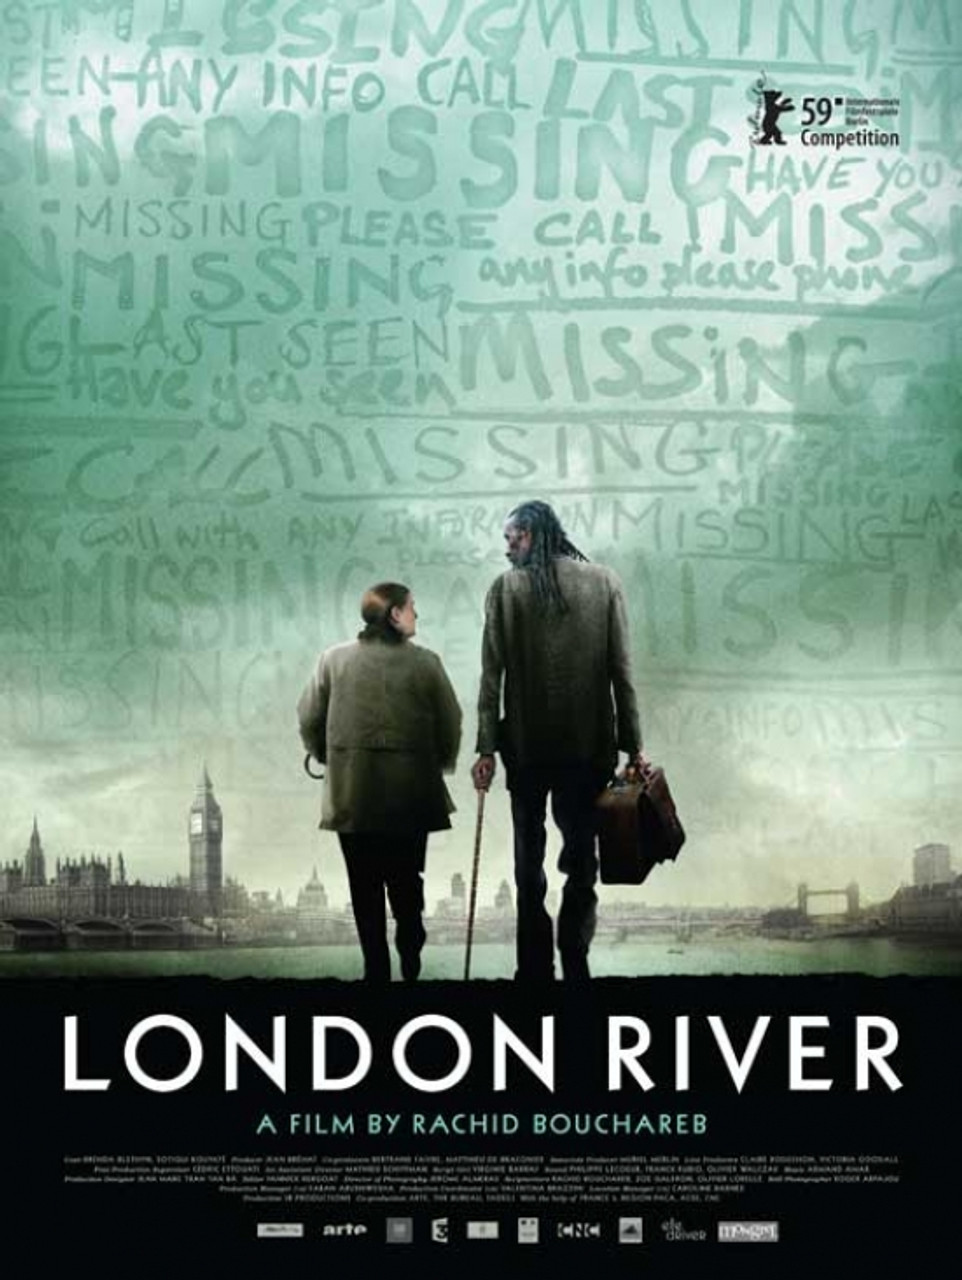 London c river